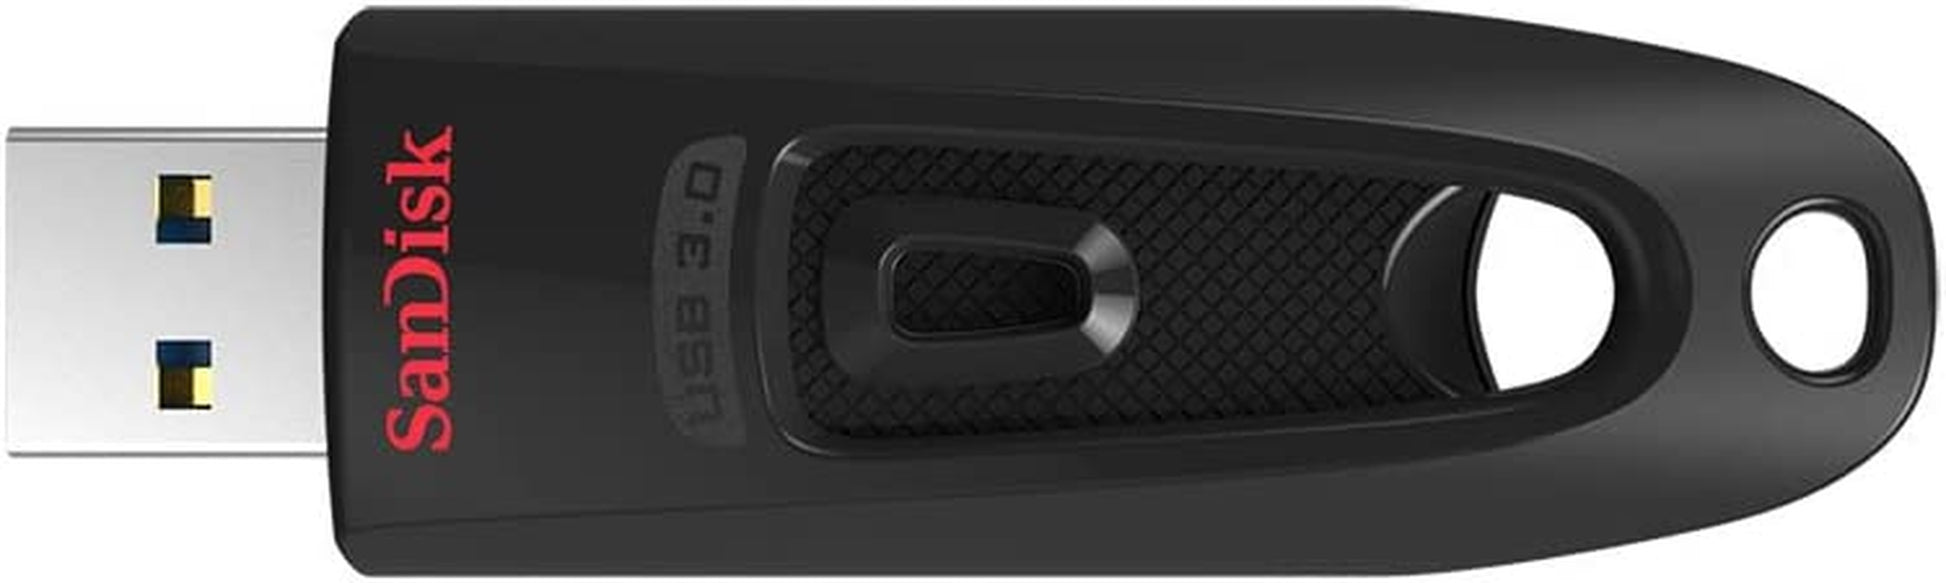 64GB 2-Pack Ultra USB 3.0 Flash Drive (2X64Gb) - SDCZ48-064G-GAM462, Black